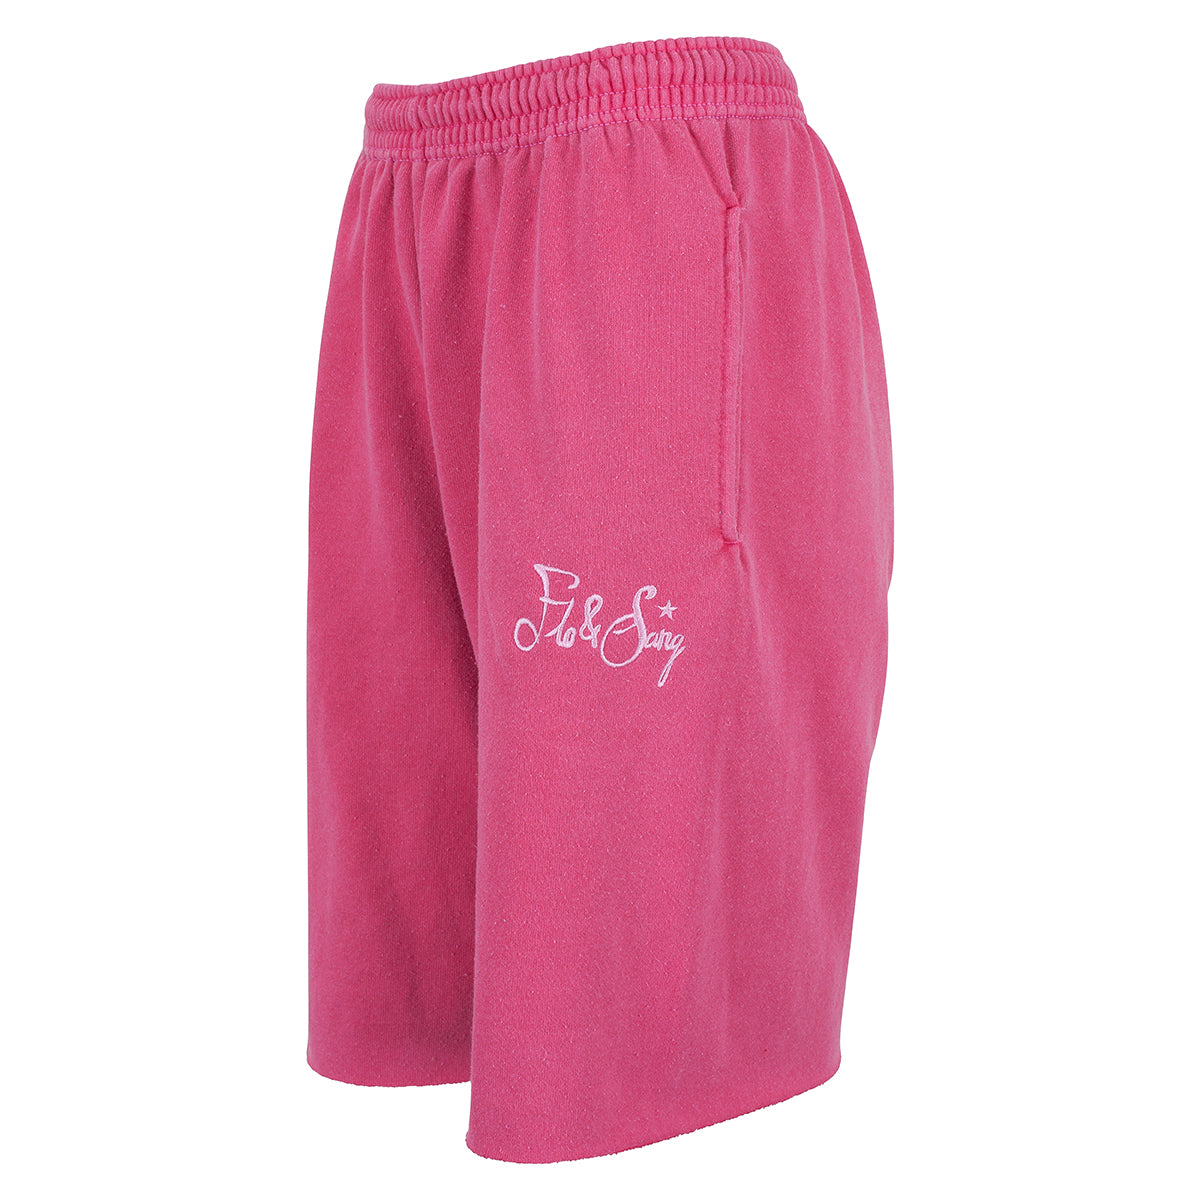 Hot Pink Men's Shorts